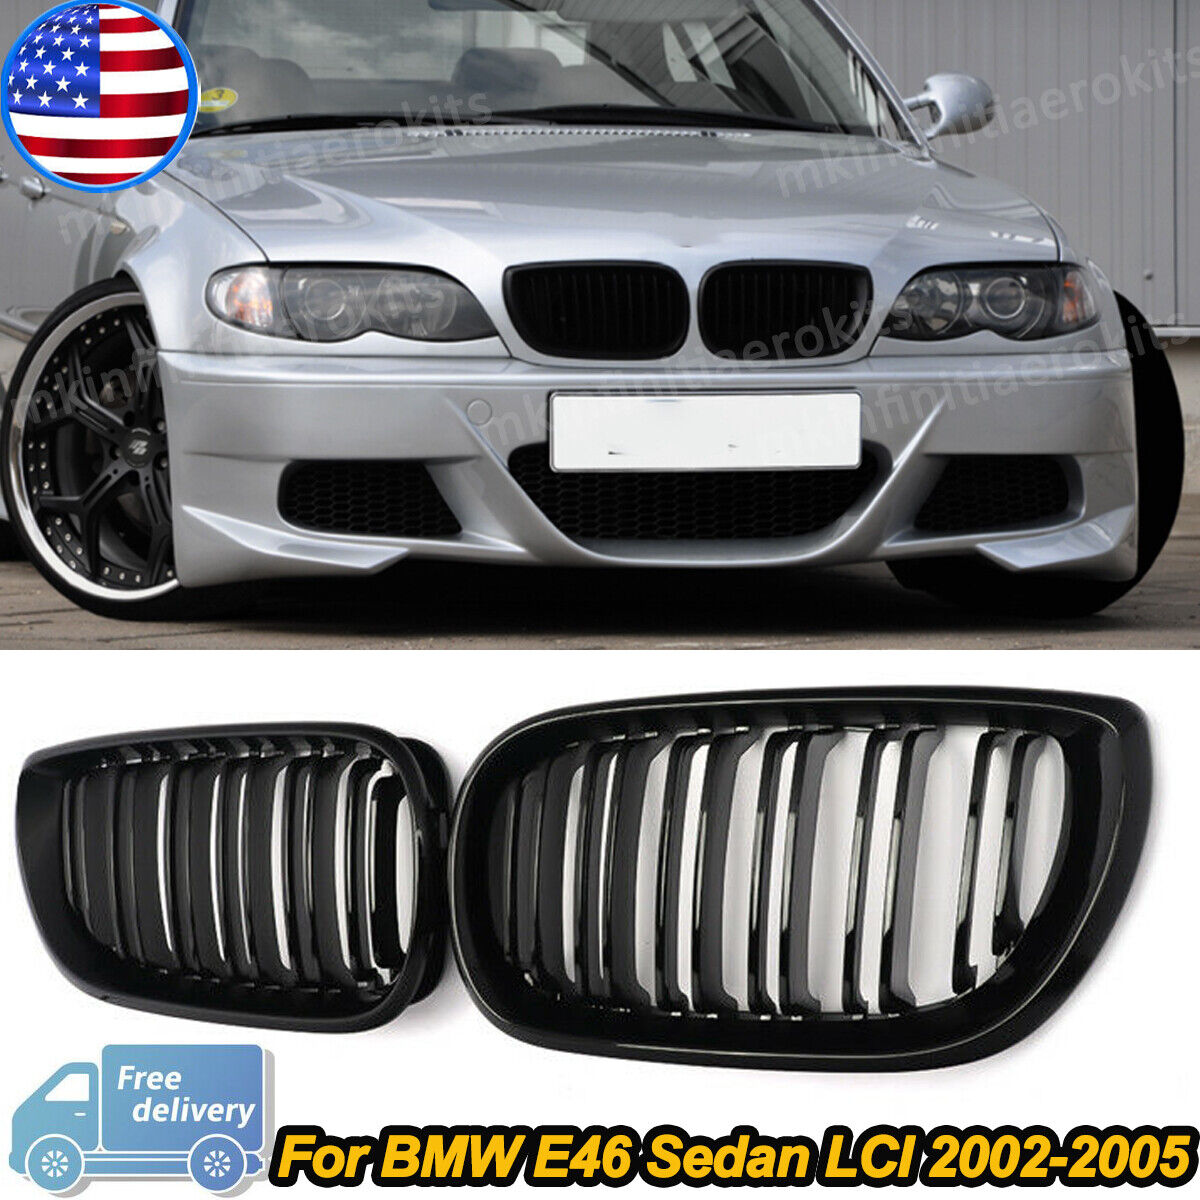 Pair Gloss Black Front Kidney Grille Grill For BMW E46 320i 325i Sedan 2002-2005